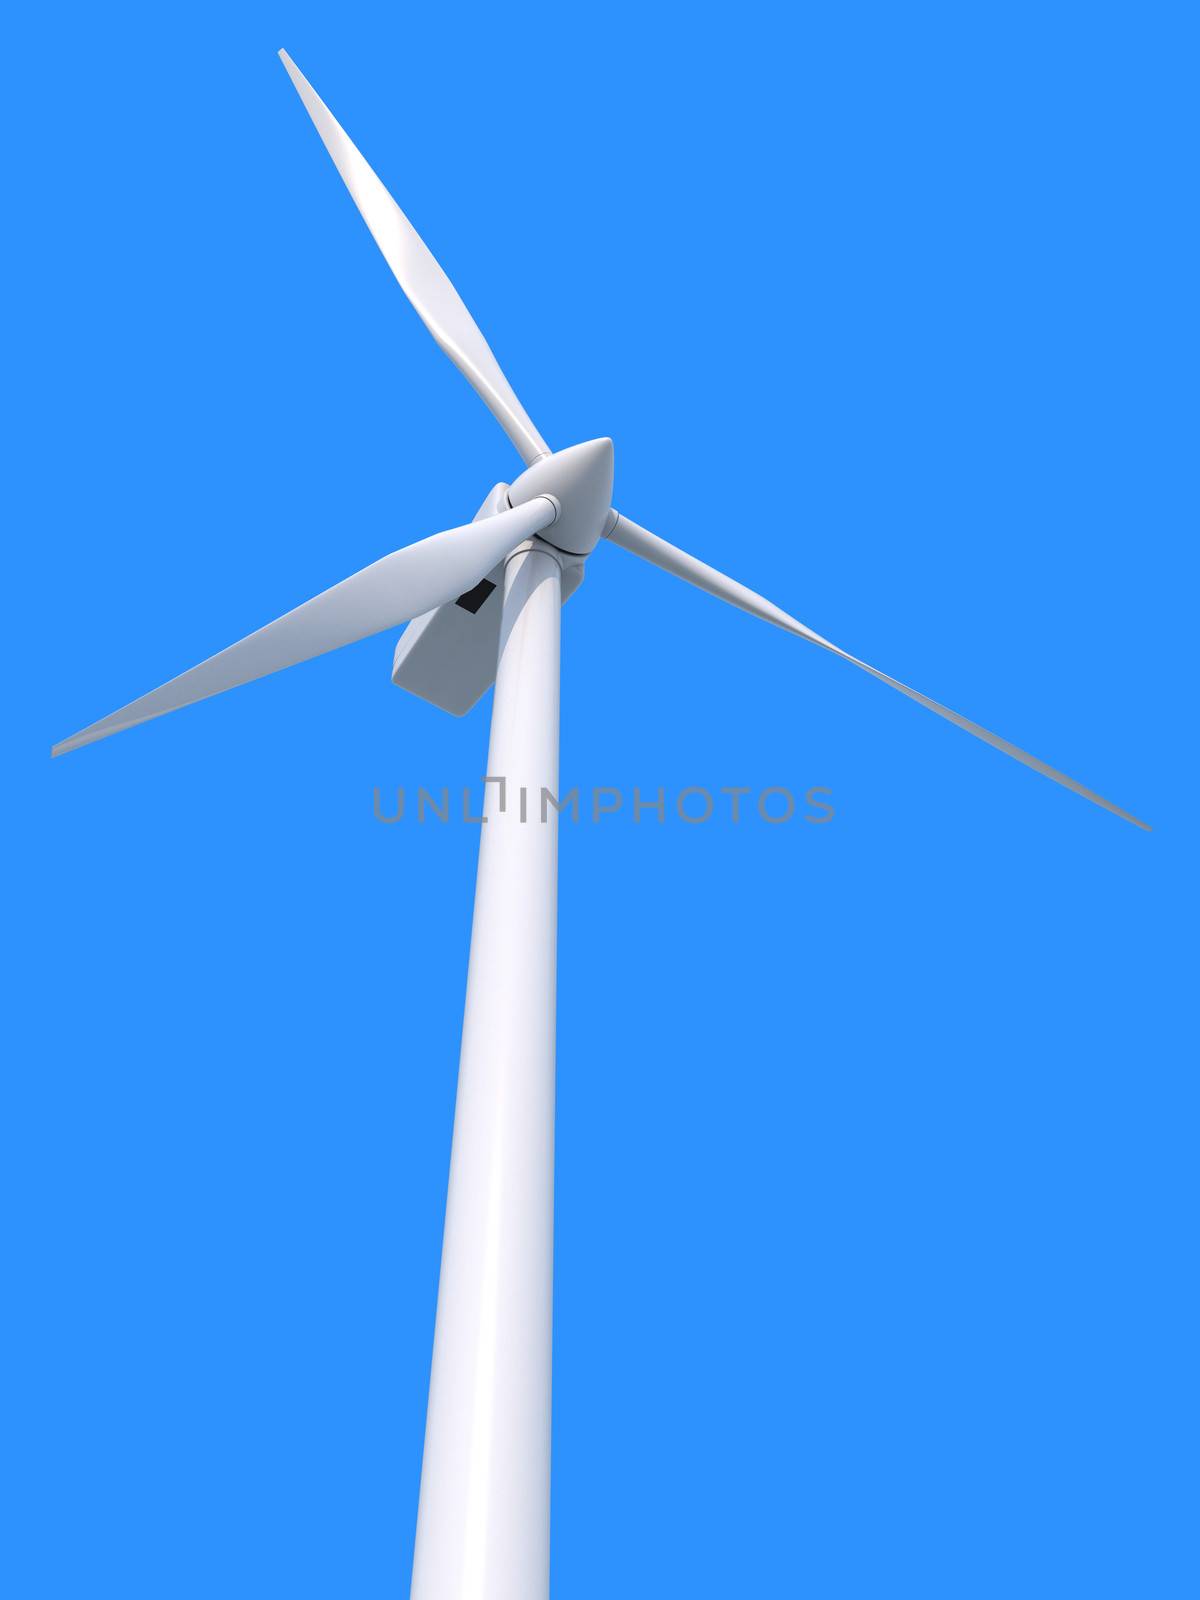 Wind power generator by Harvepino